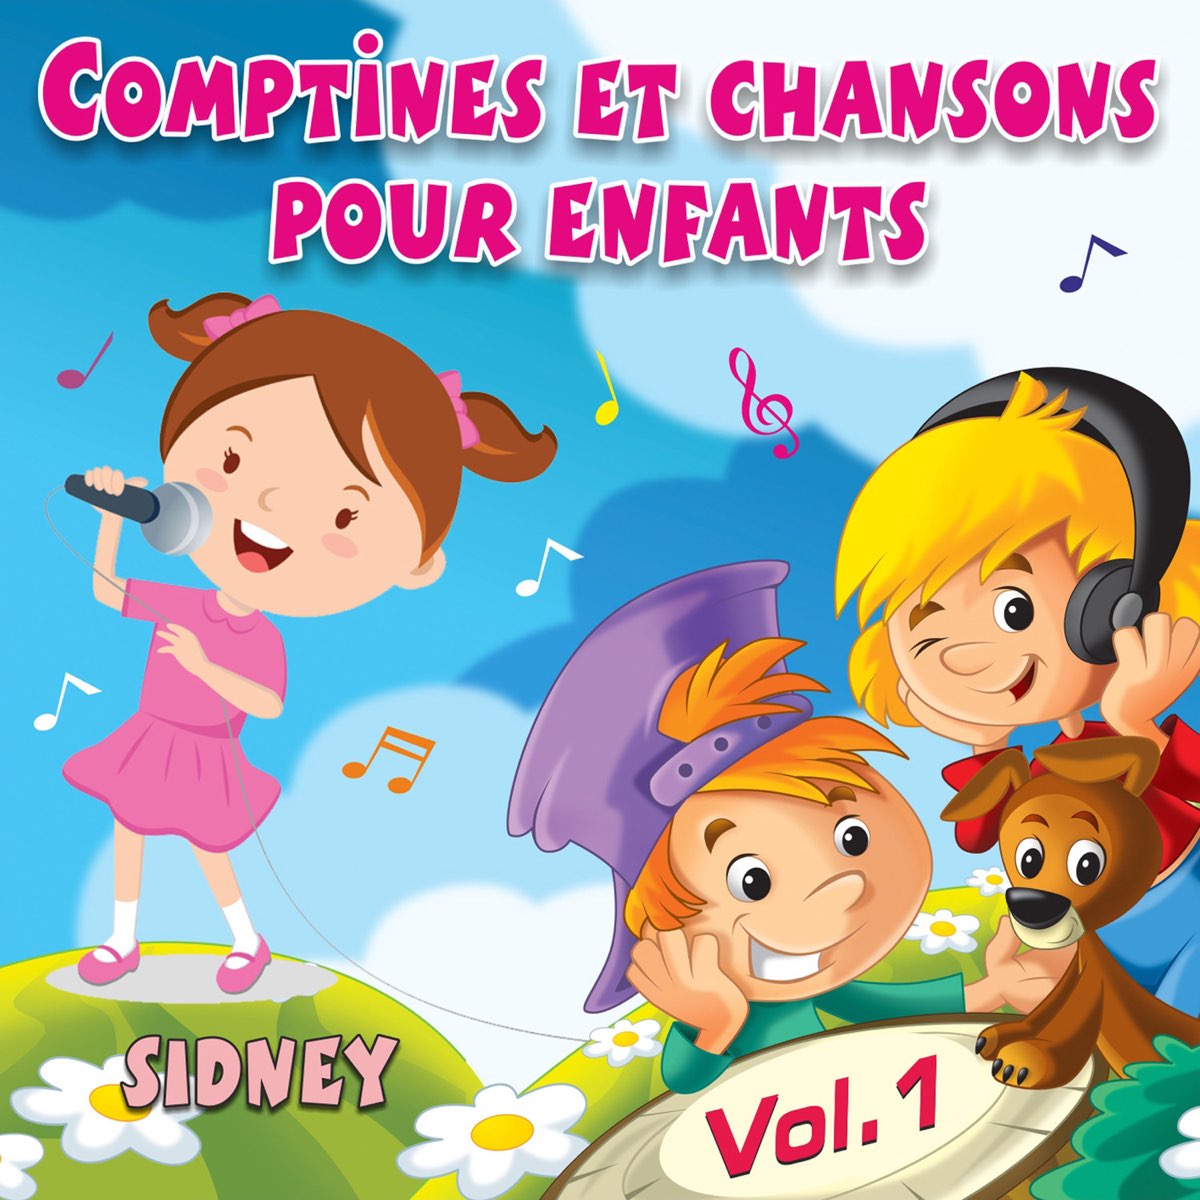 Comptines et chansons pour enfants, Vol. 1 by Sidney on Apple Music